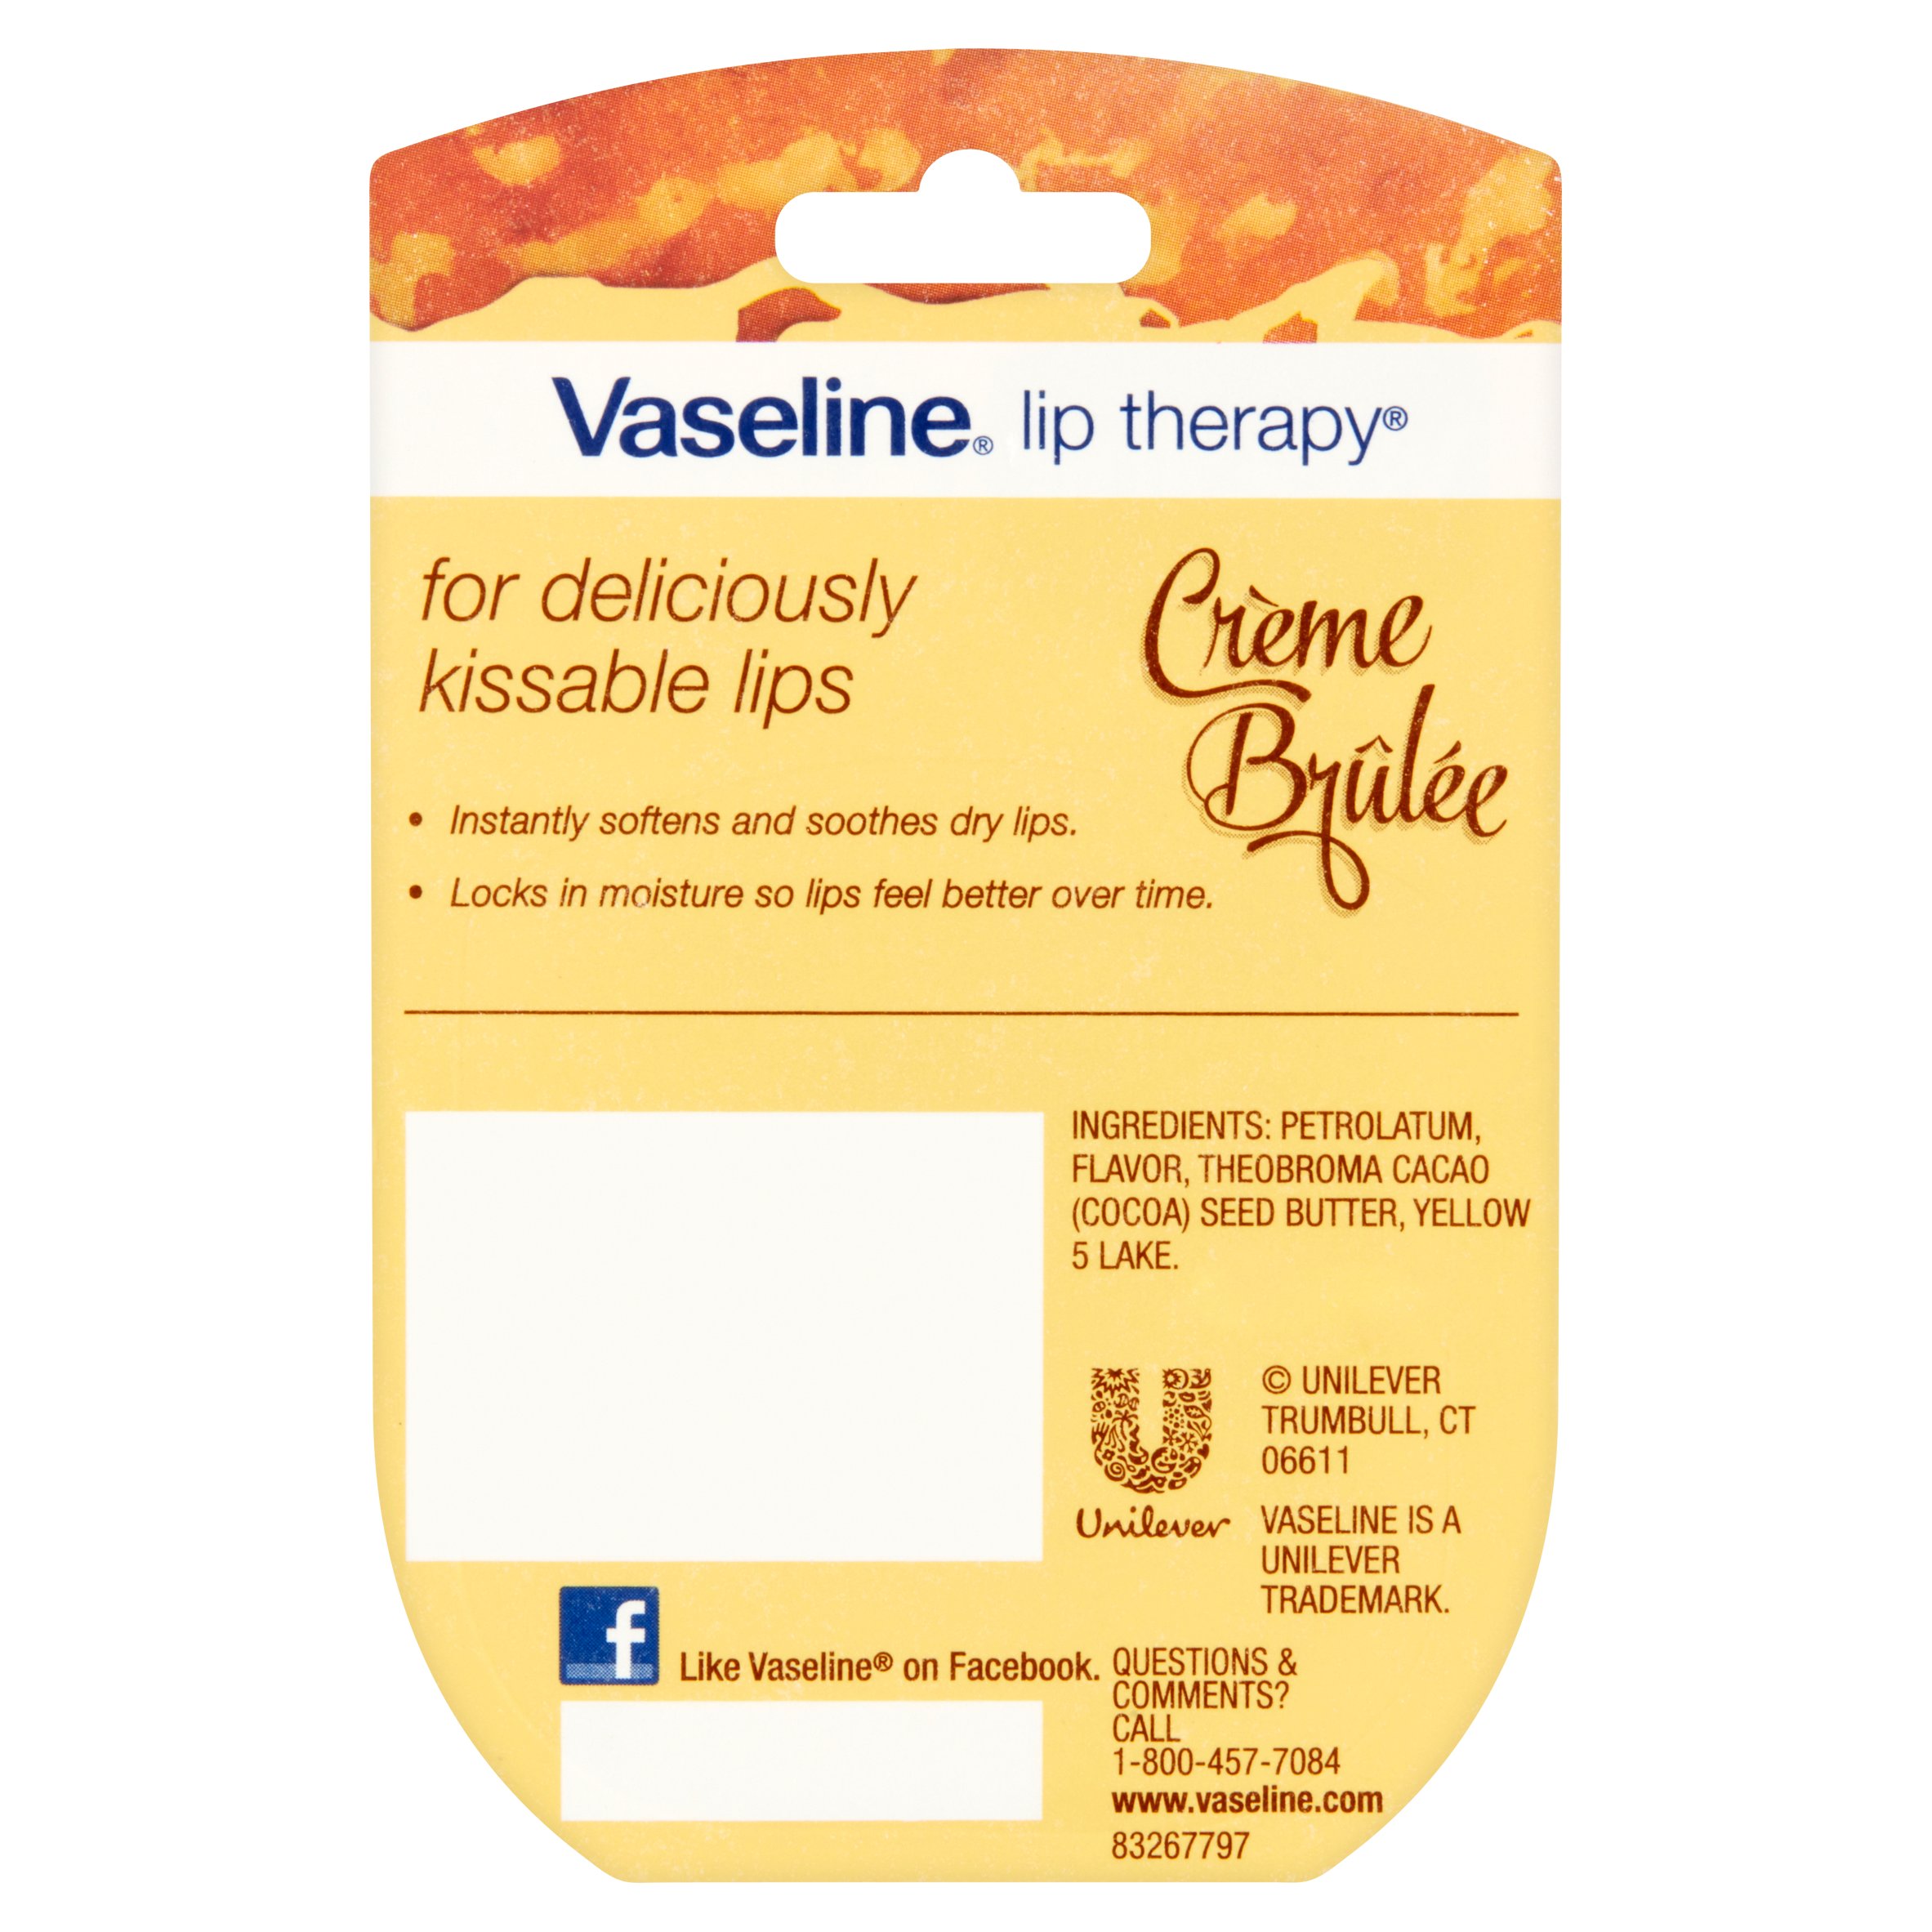 Vaseline Creme Brulee Lip Therapy Lip Balm, 0.25 oz - image 3 of 4